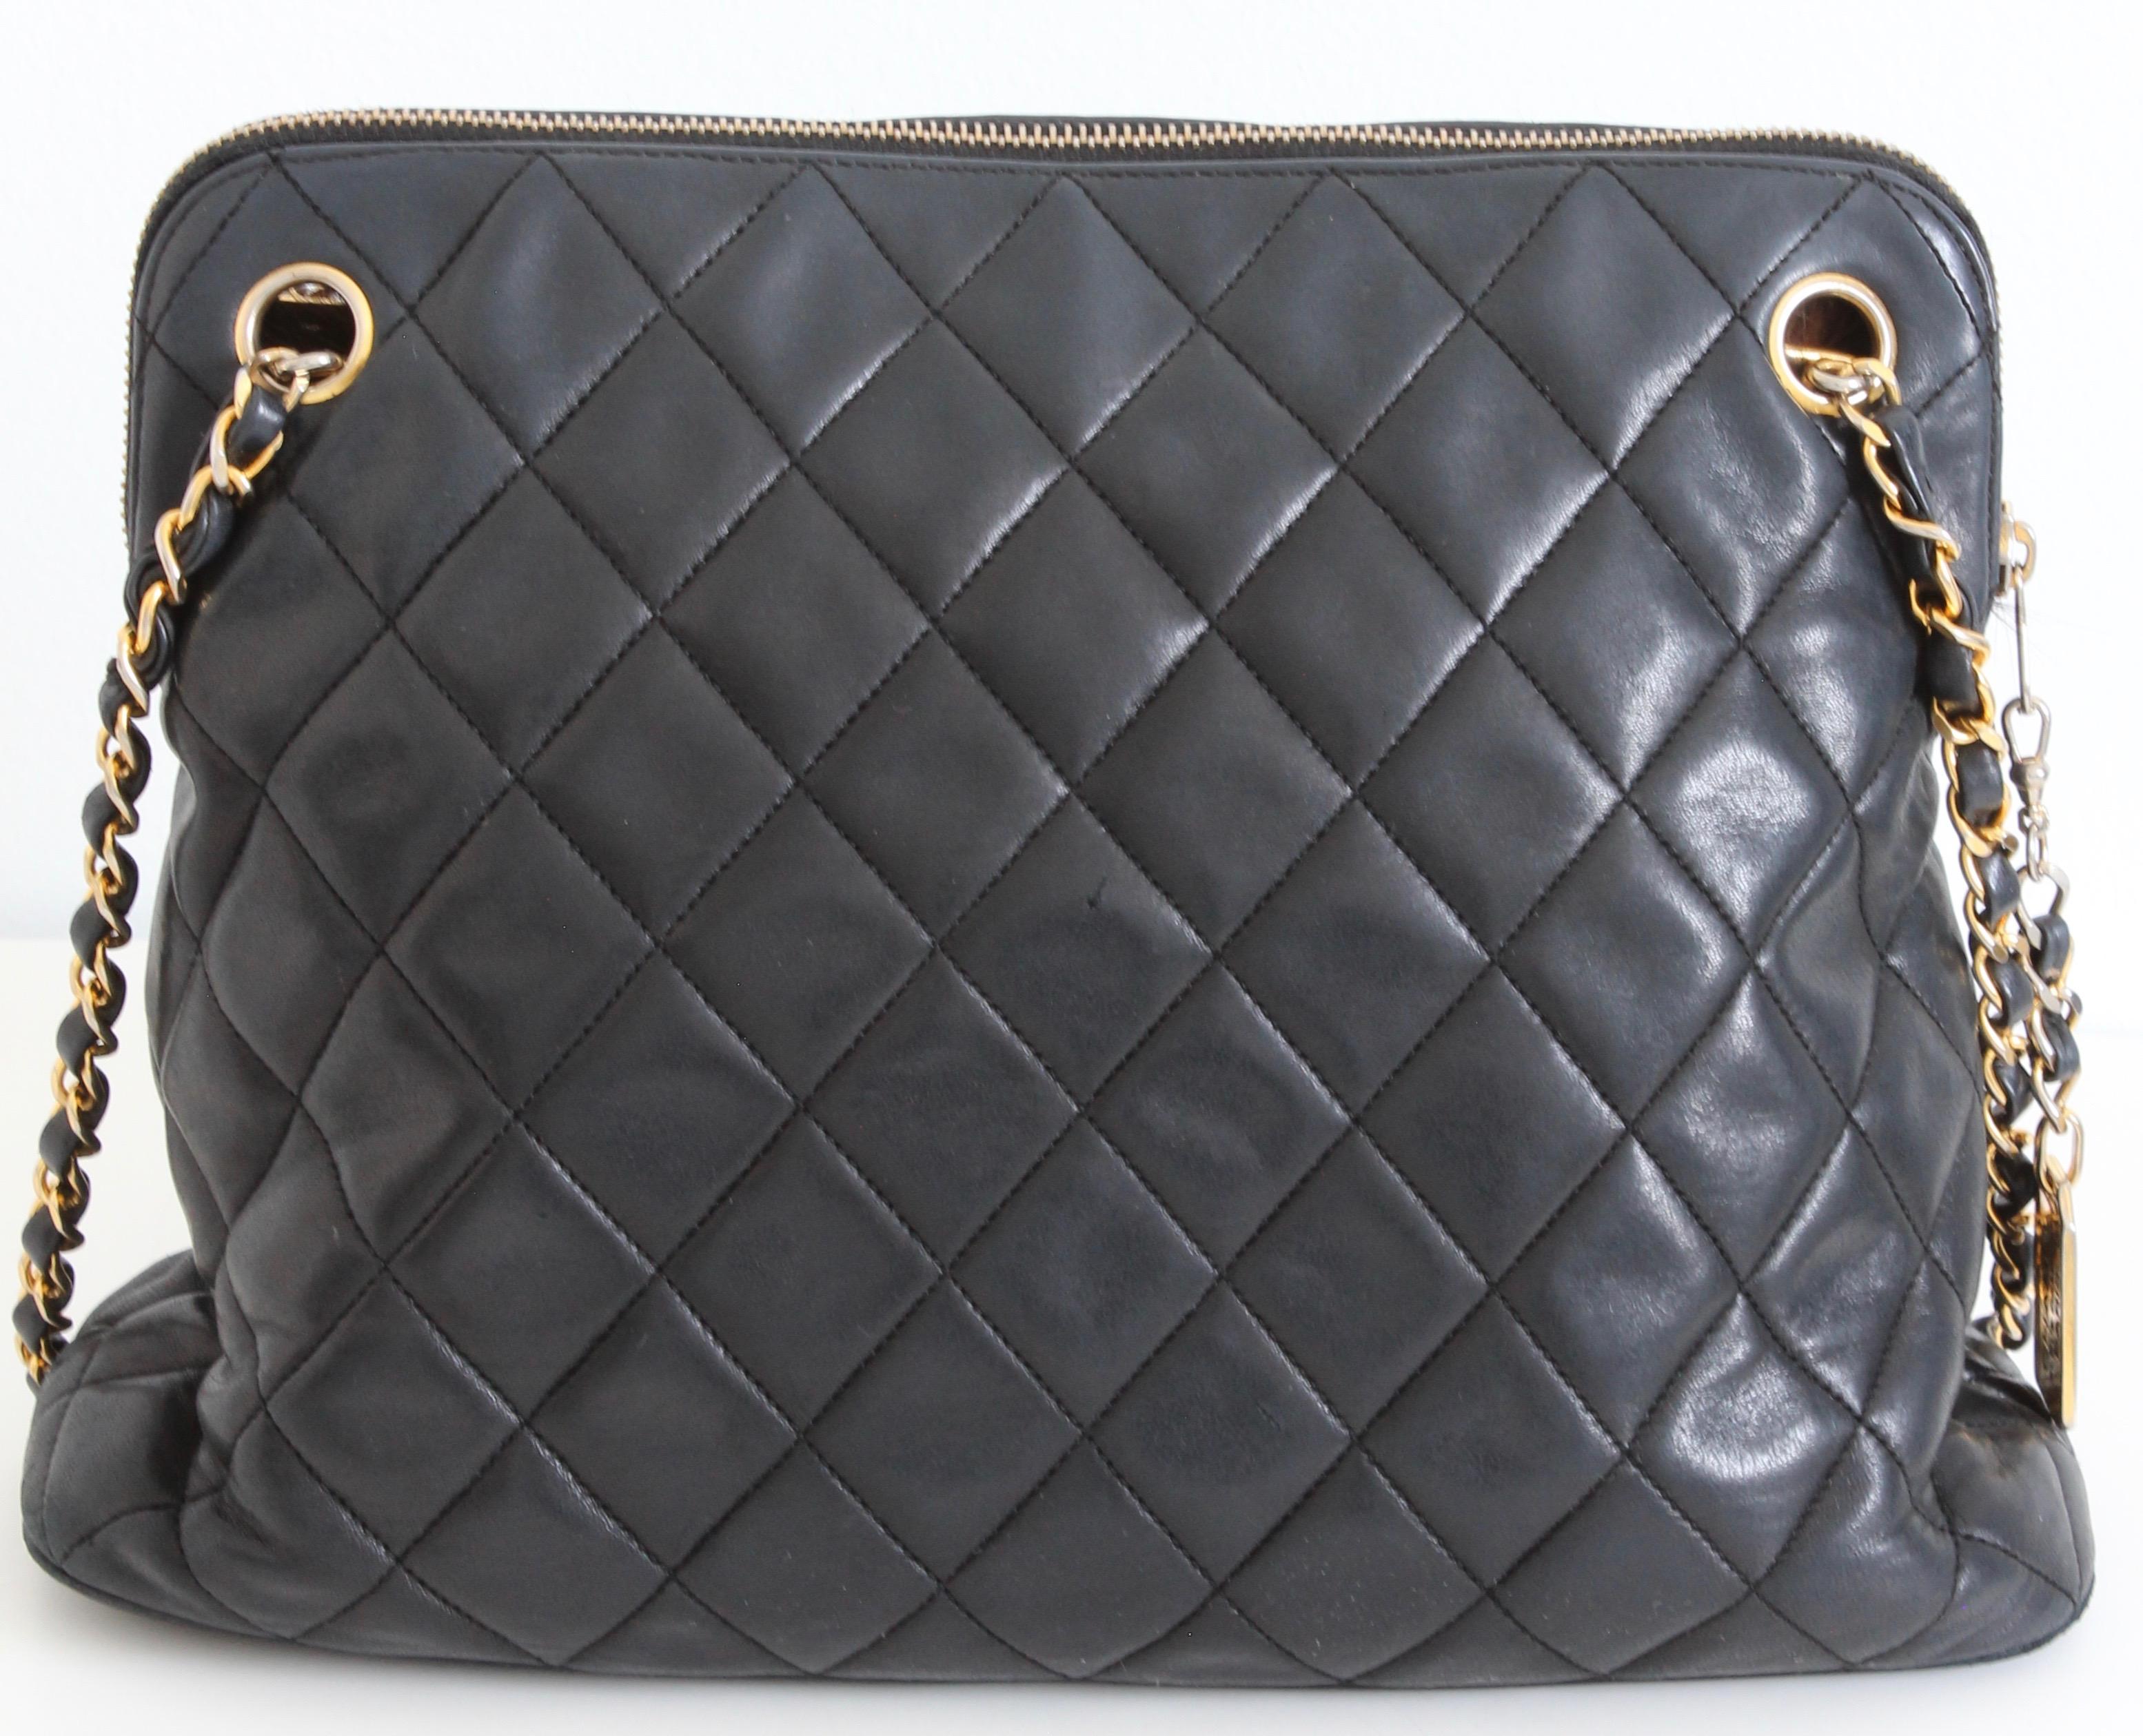 Gray Iconic Chanel Shoulder Bag Lambskin Matelasse Leather Chain Straps + Dust Bag